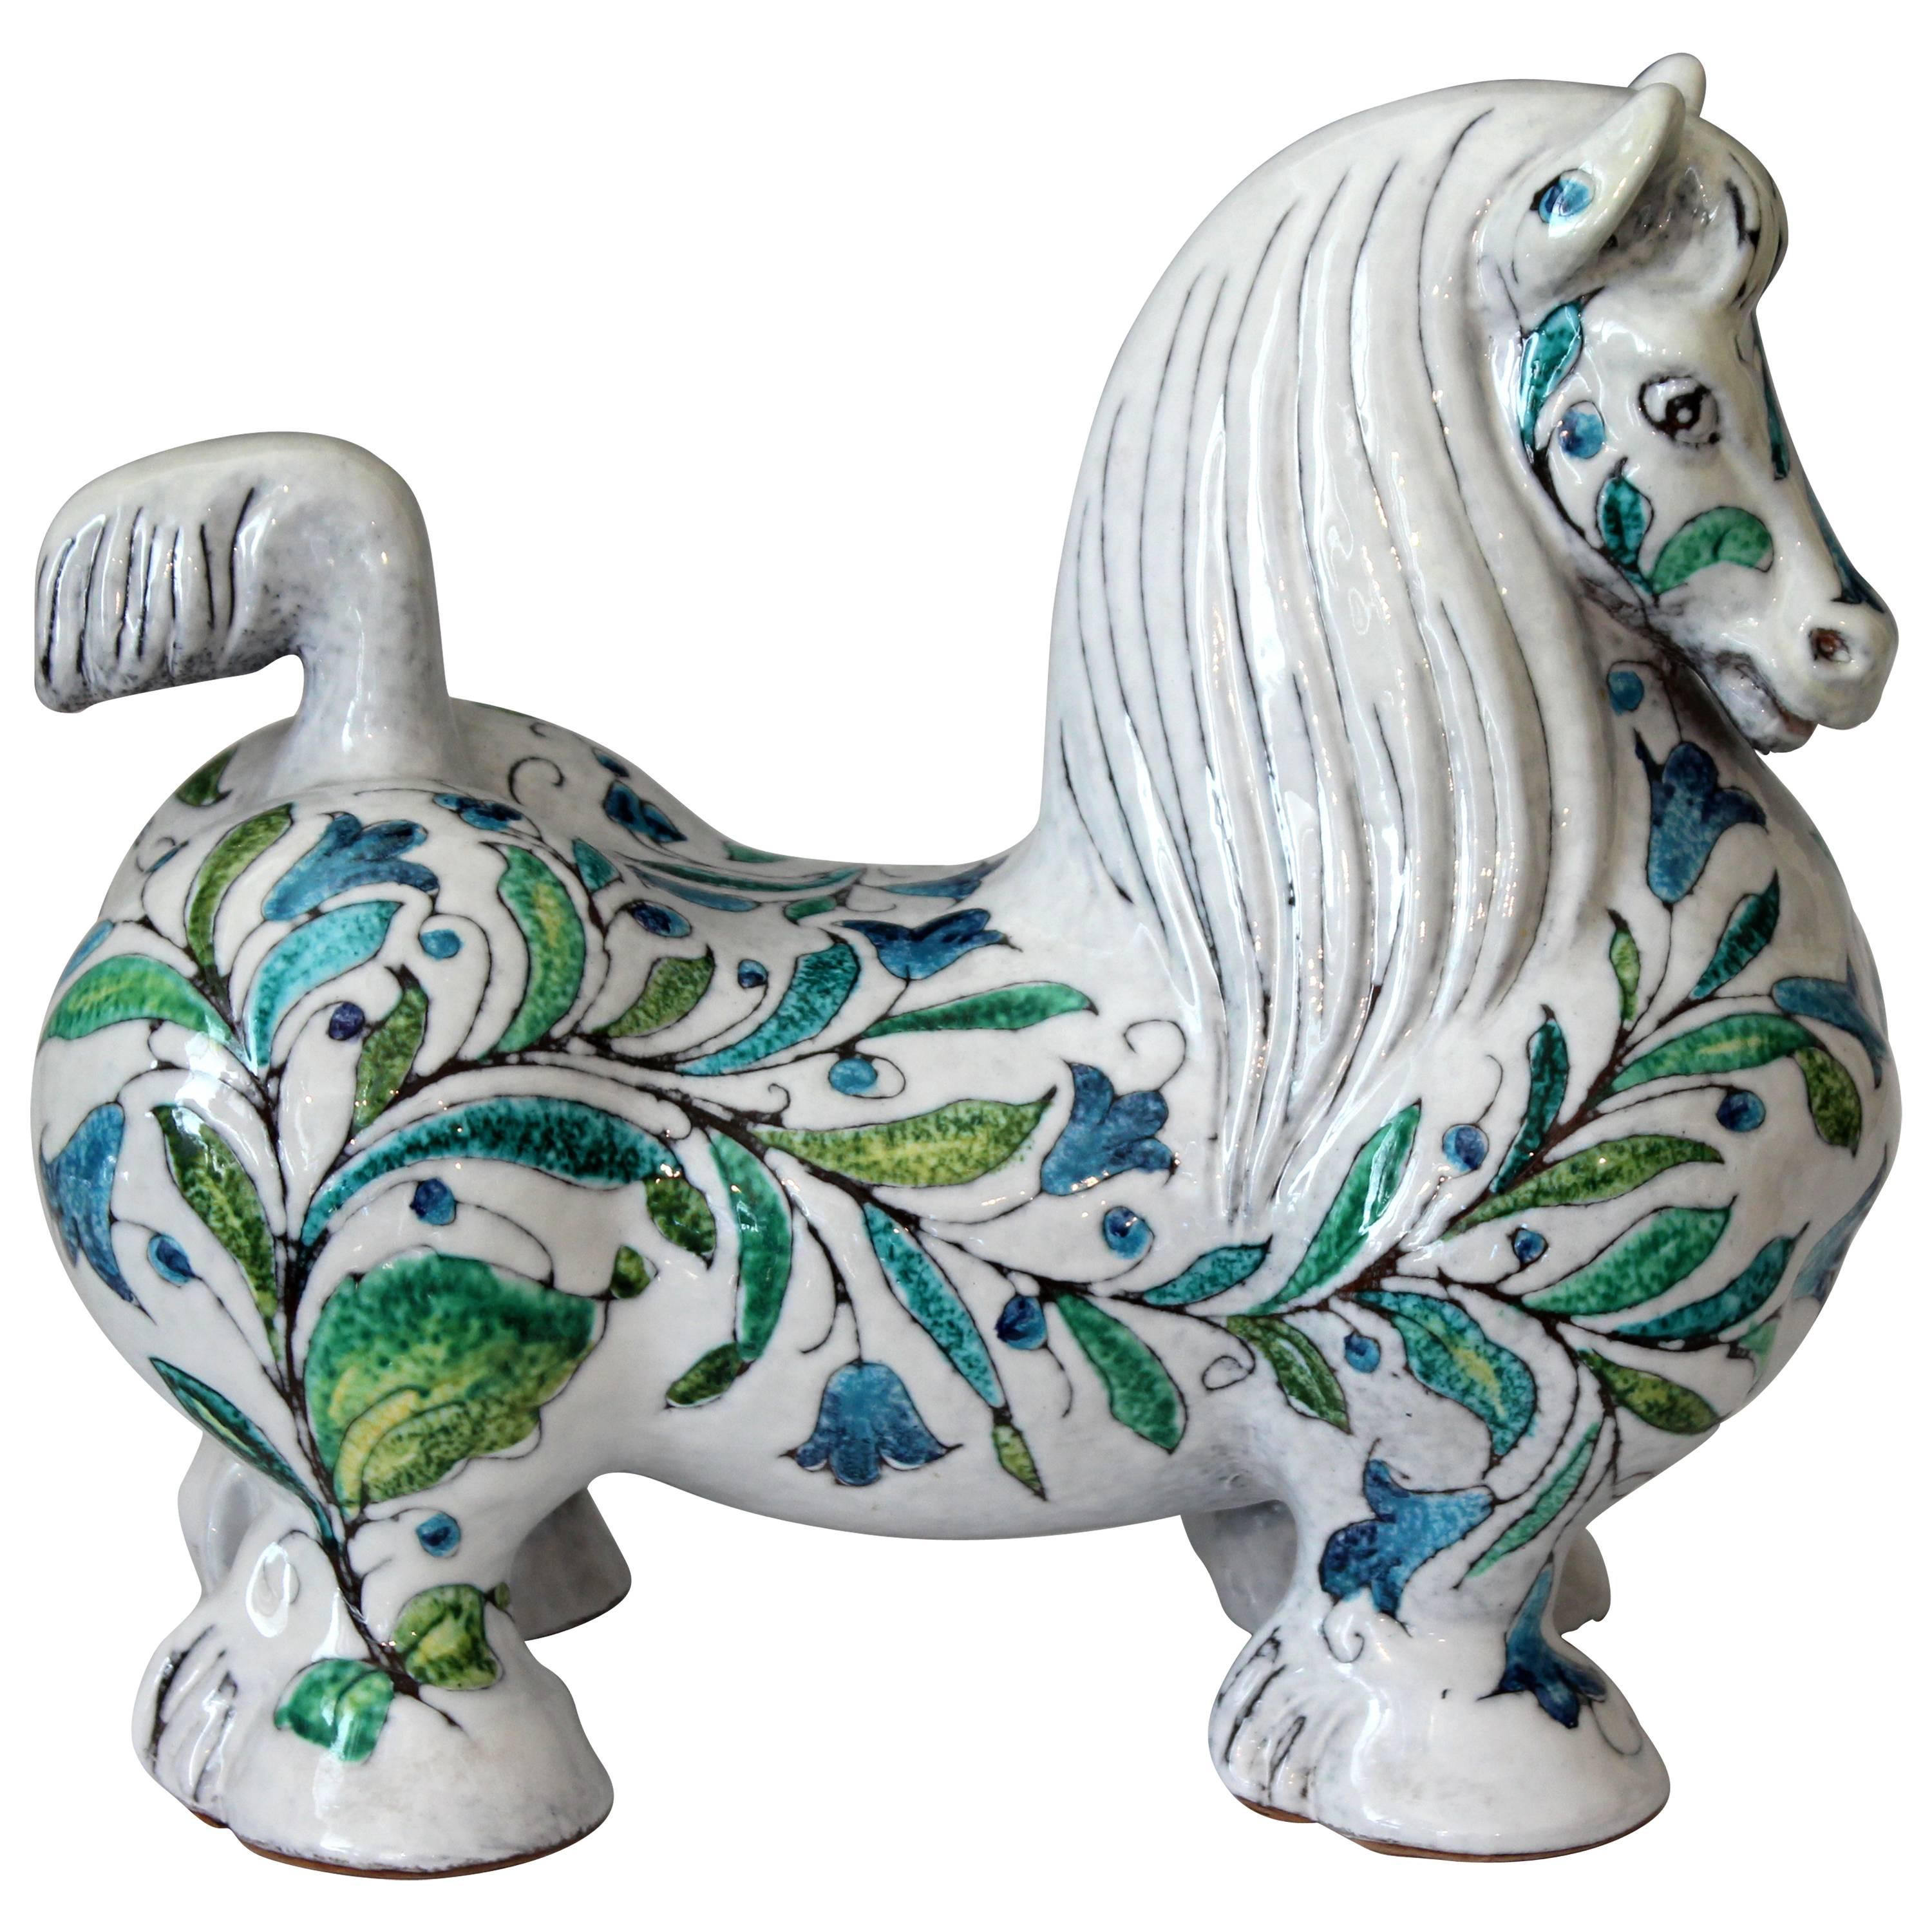 Big 1960's Vintage Mancioli Italian Pottery Horse Figure Sculpture